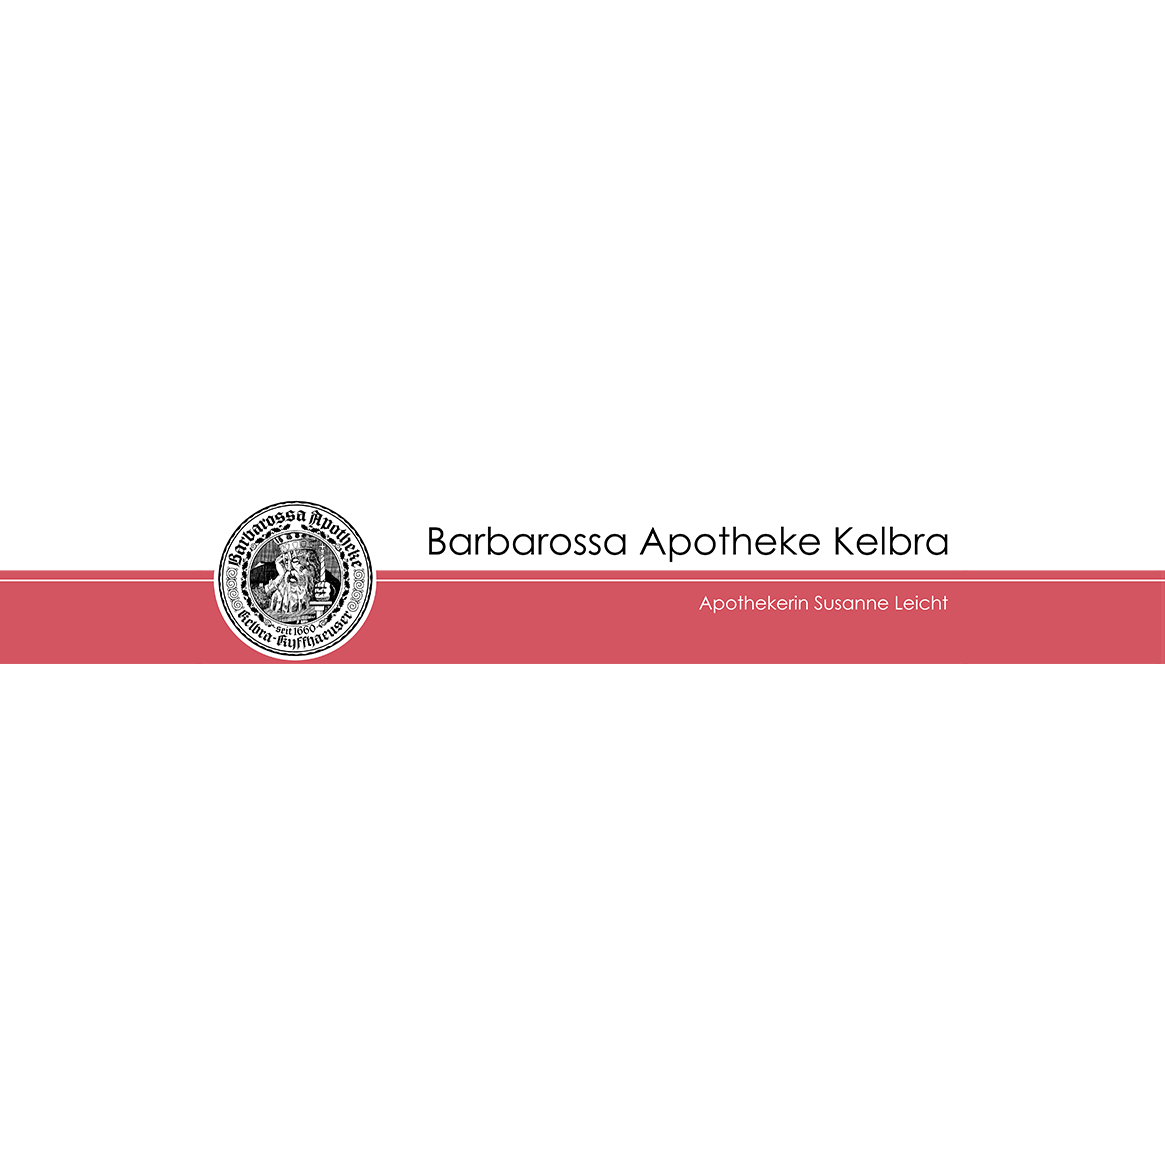 Barbarossa-Apotheke in Kelbra am Kyffhäuser - Logo